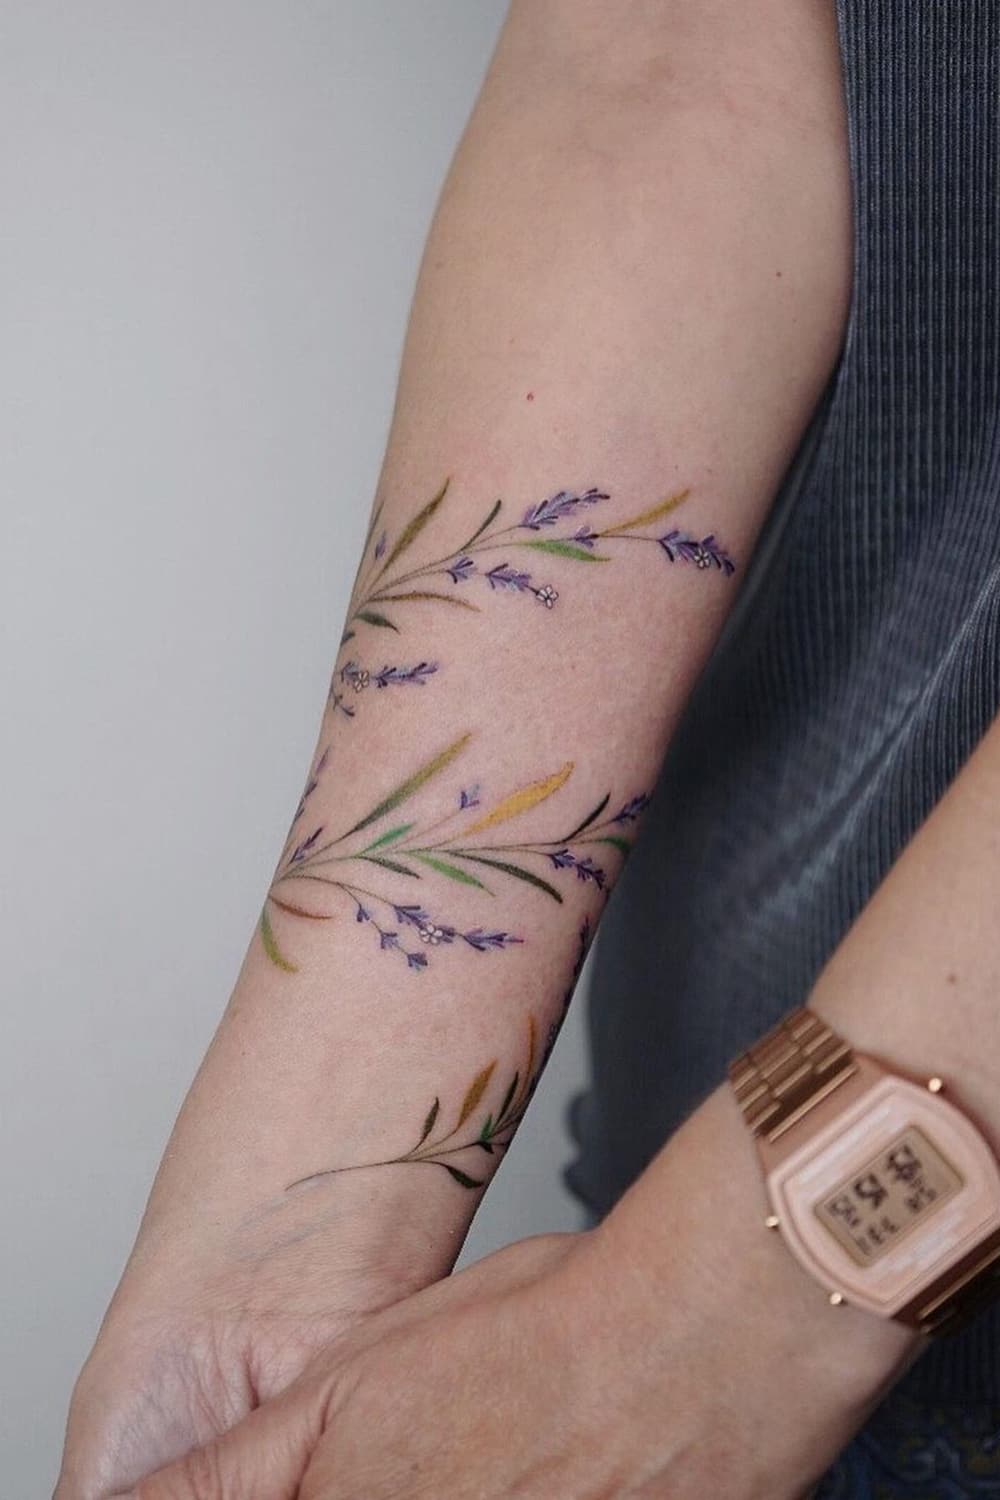 Lavender armband tattoo